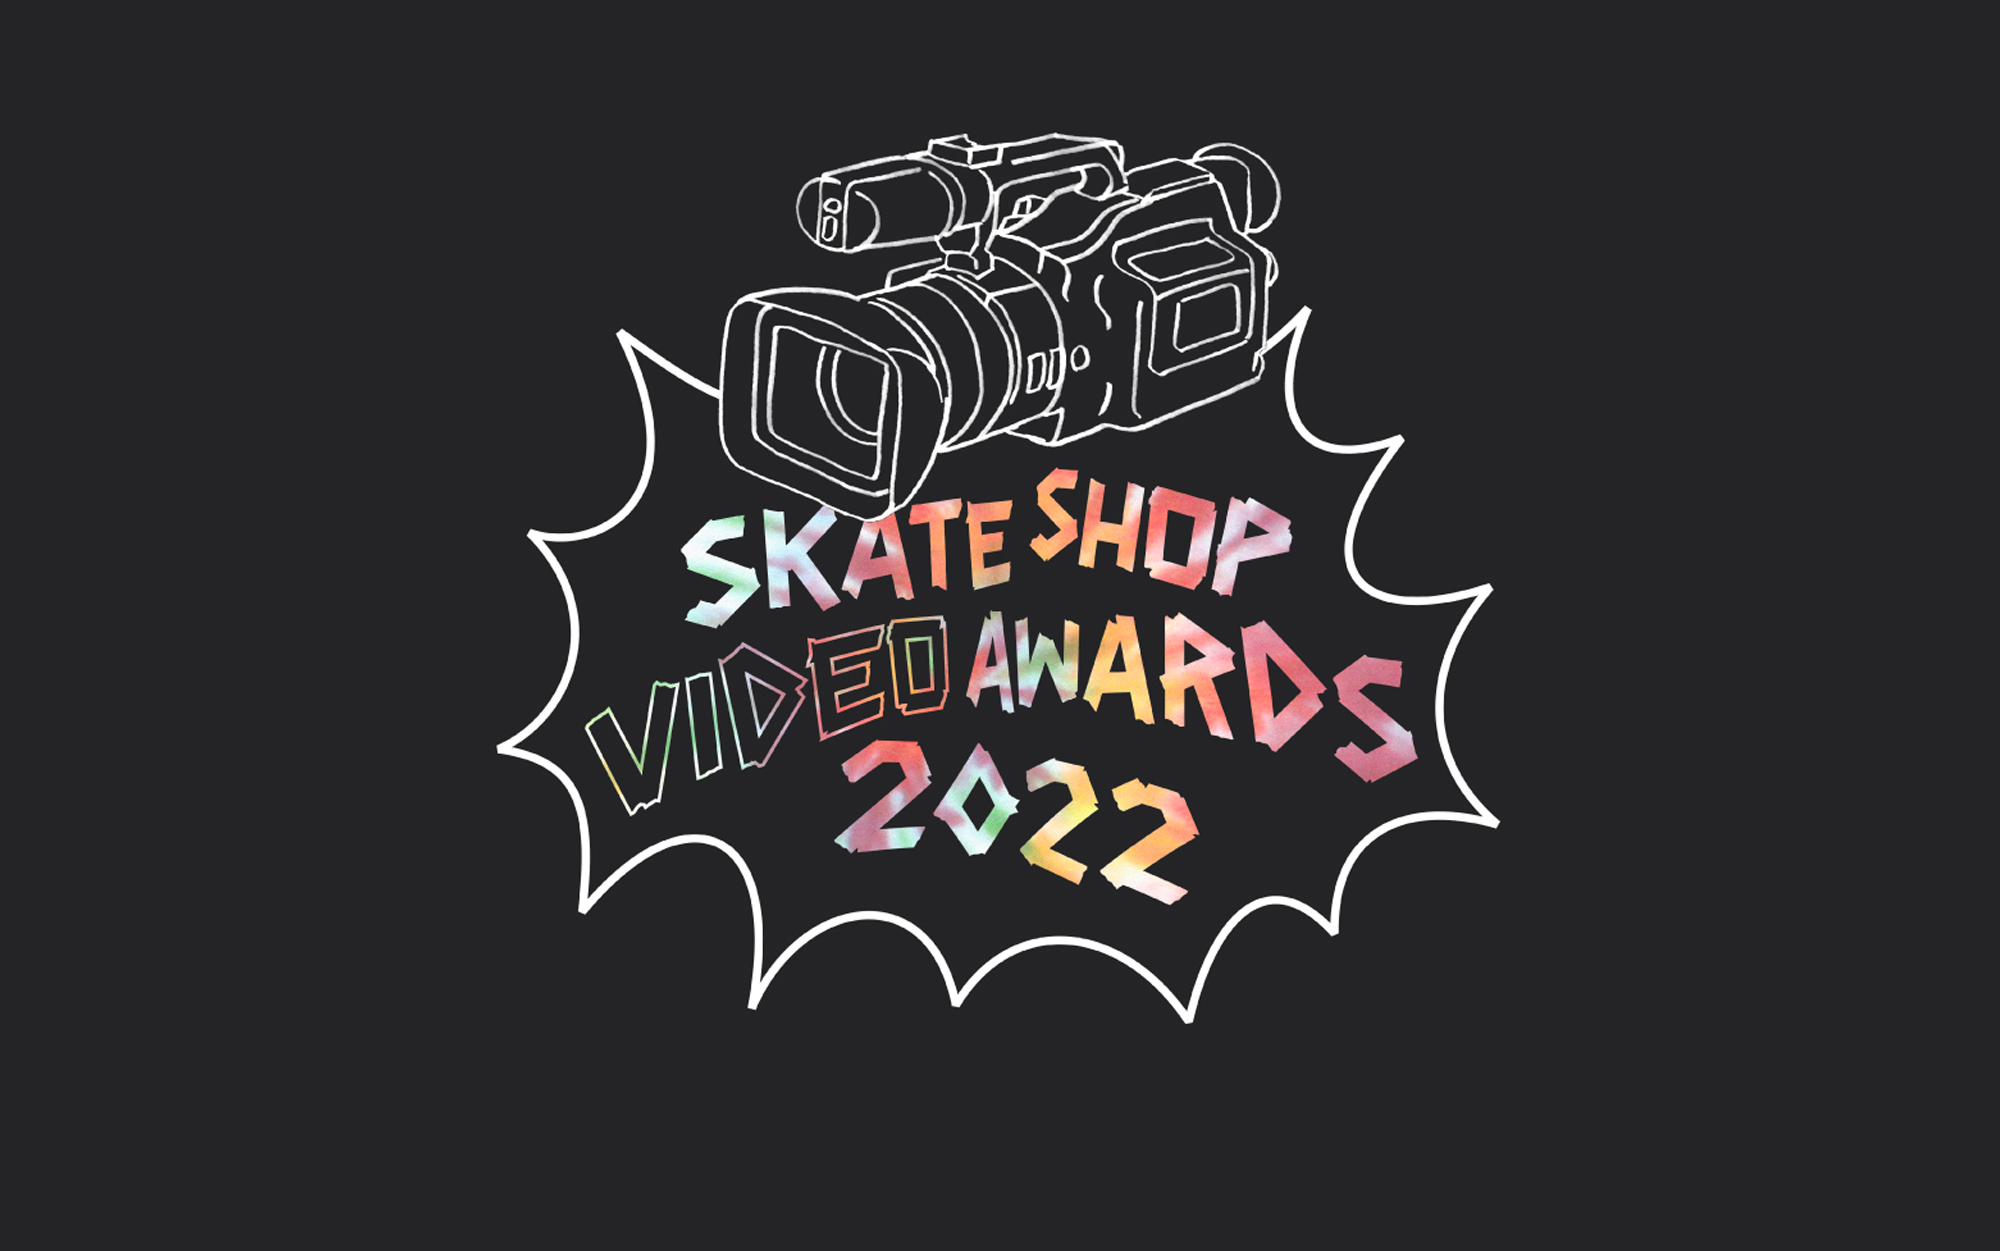 SKATE SHOP VIDEO AWARDS 2022